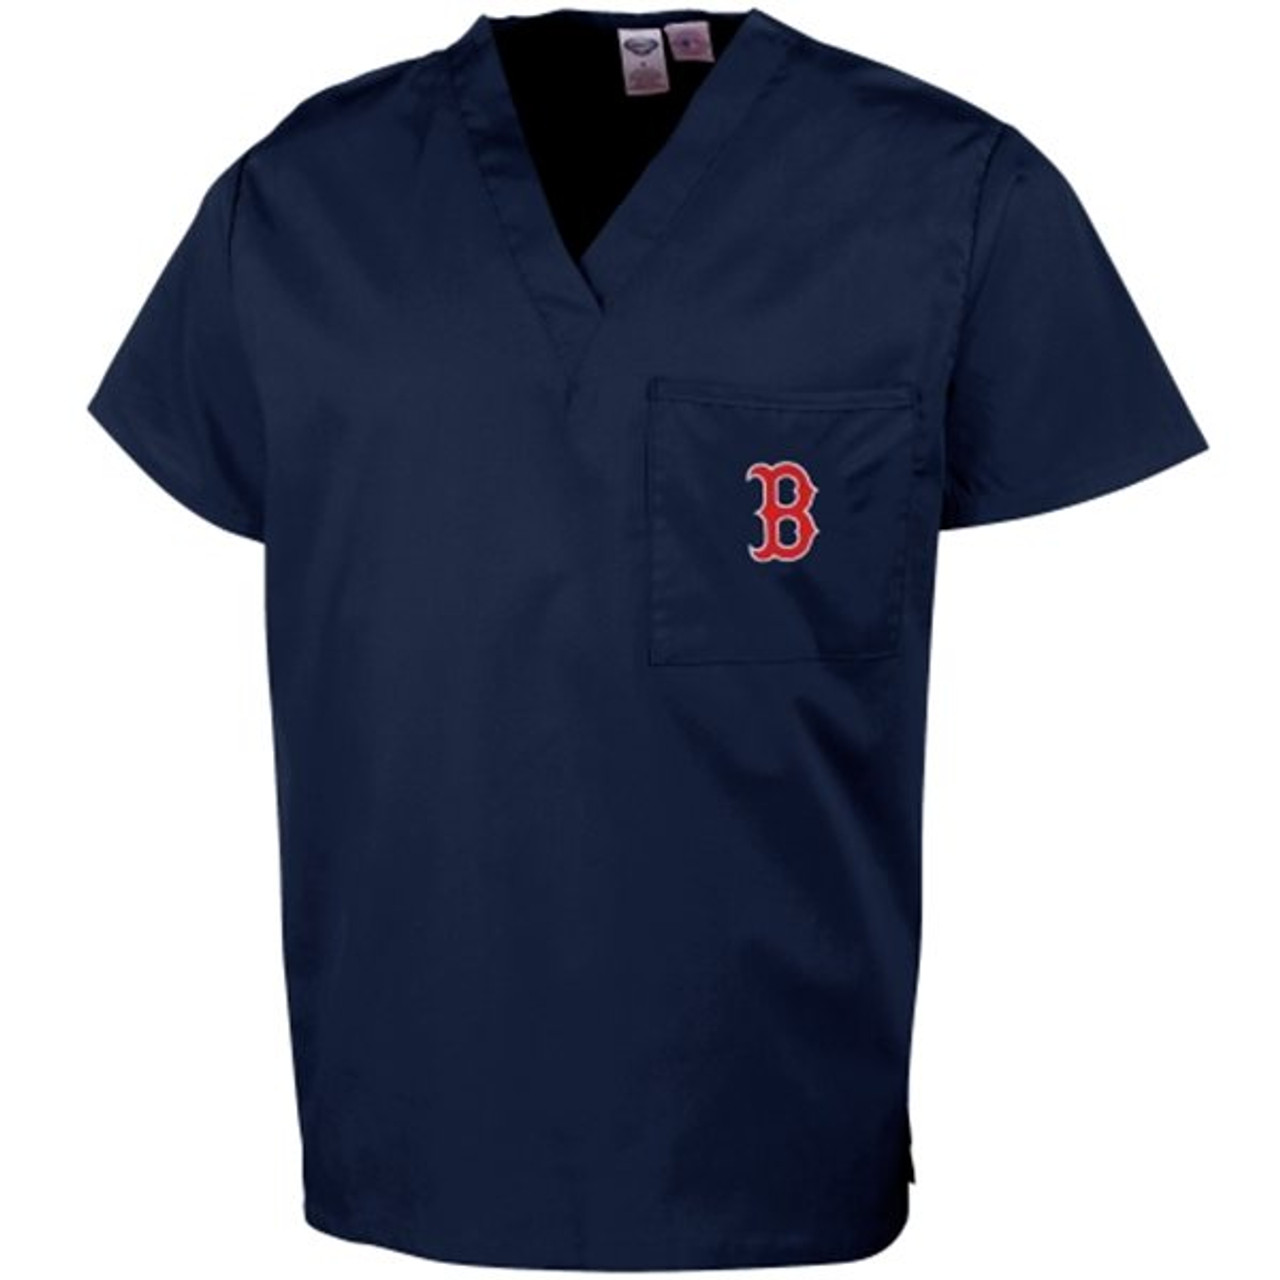 MLB Boston Red Sox Men's Long Sleeve Core T-Shirt - S